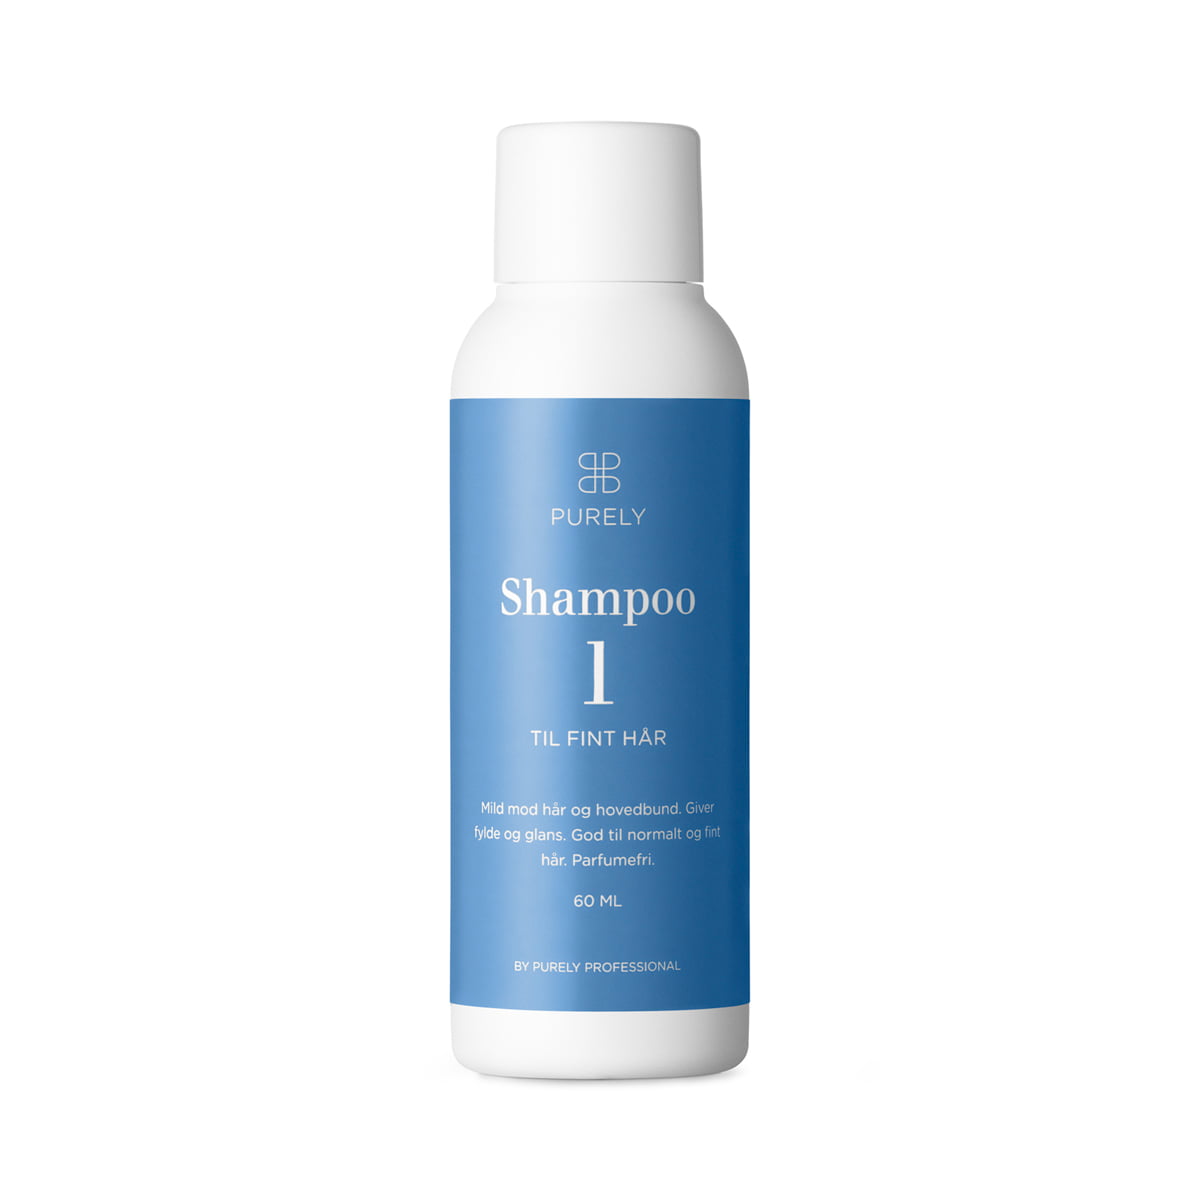 Shampoo 1 - 60 ml